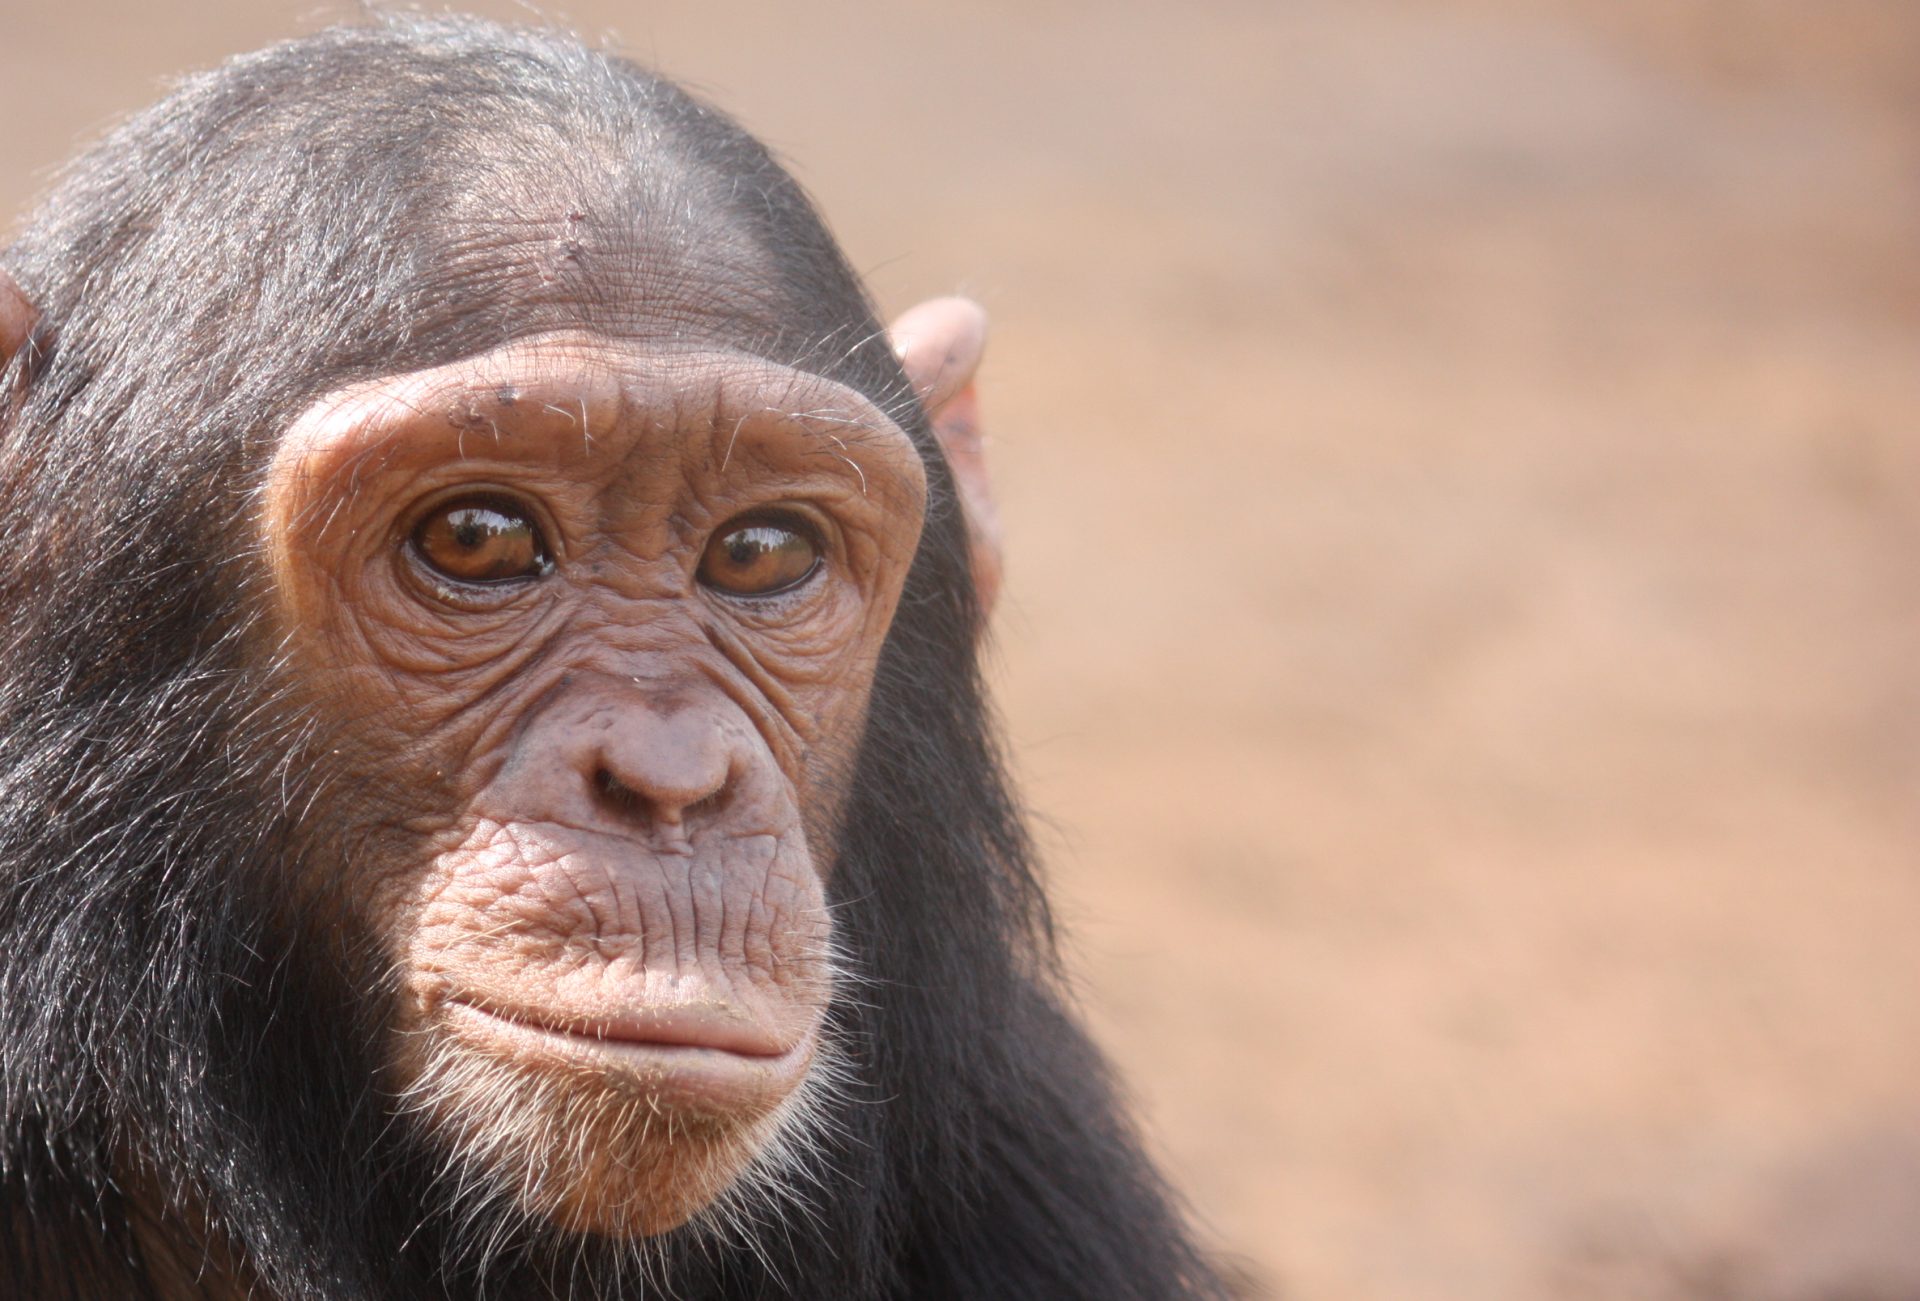 Help us protect chimpanzees